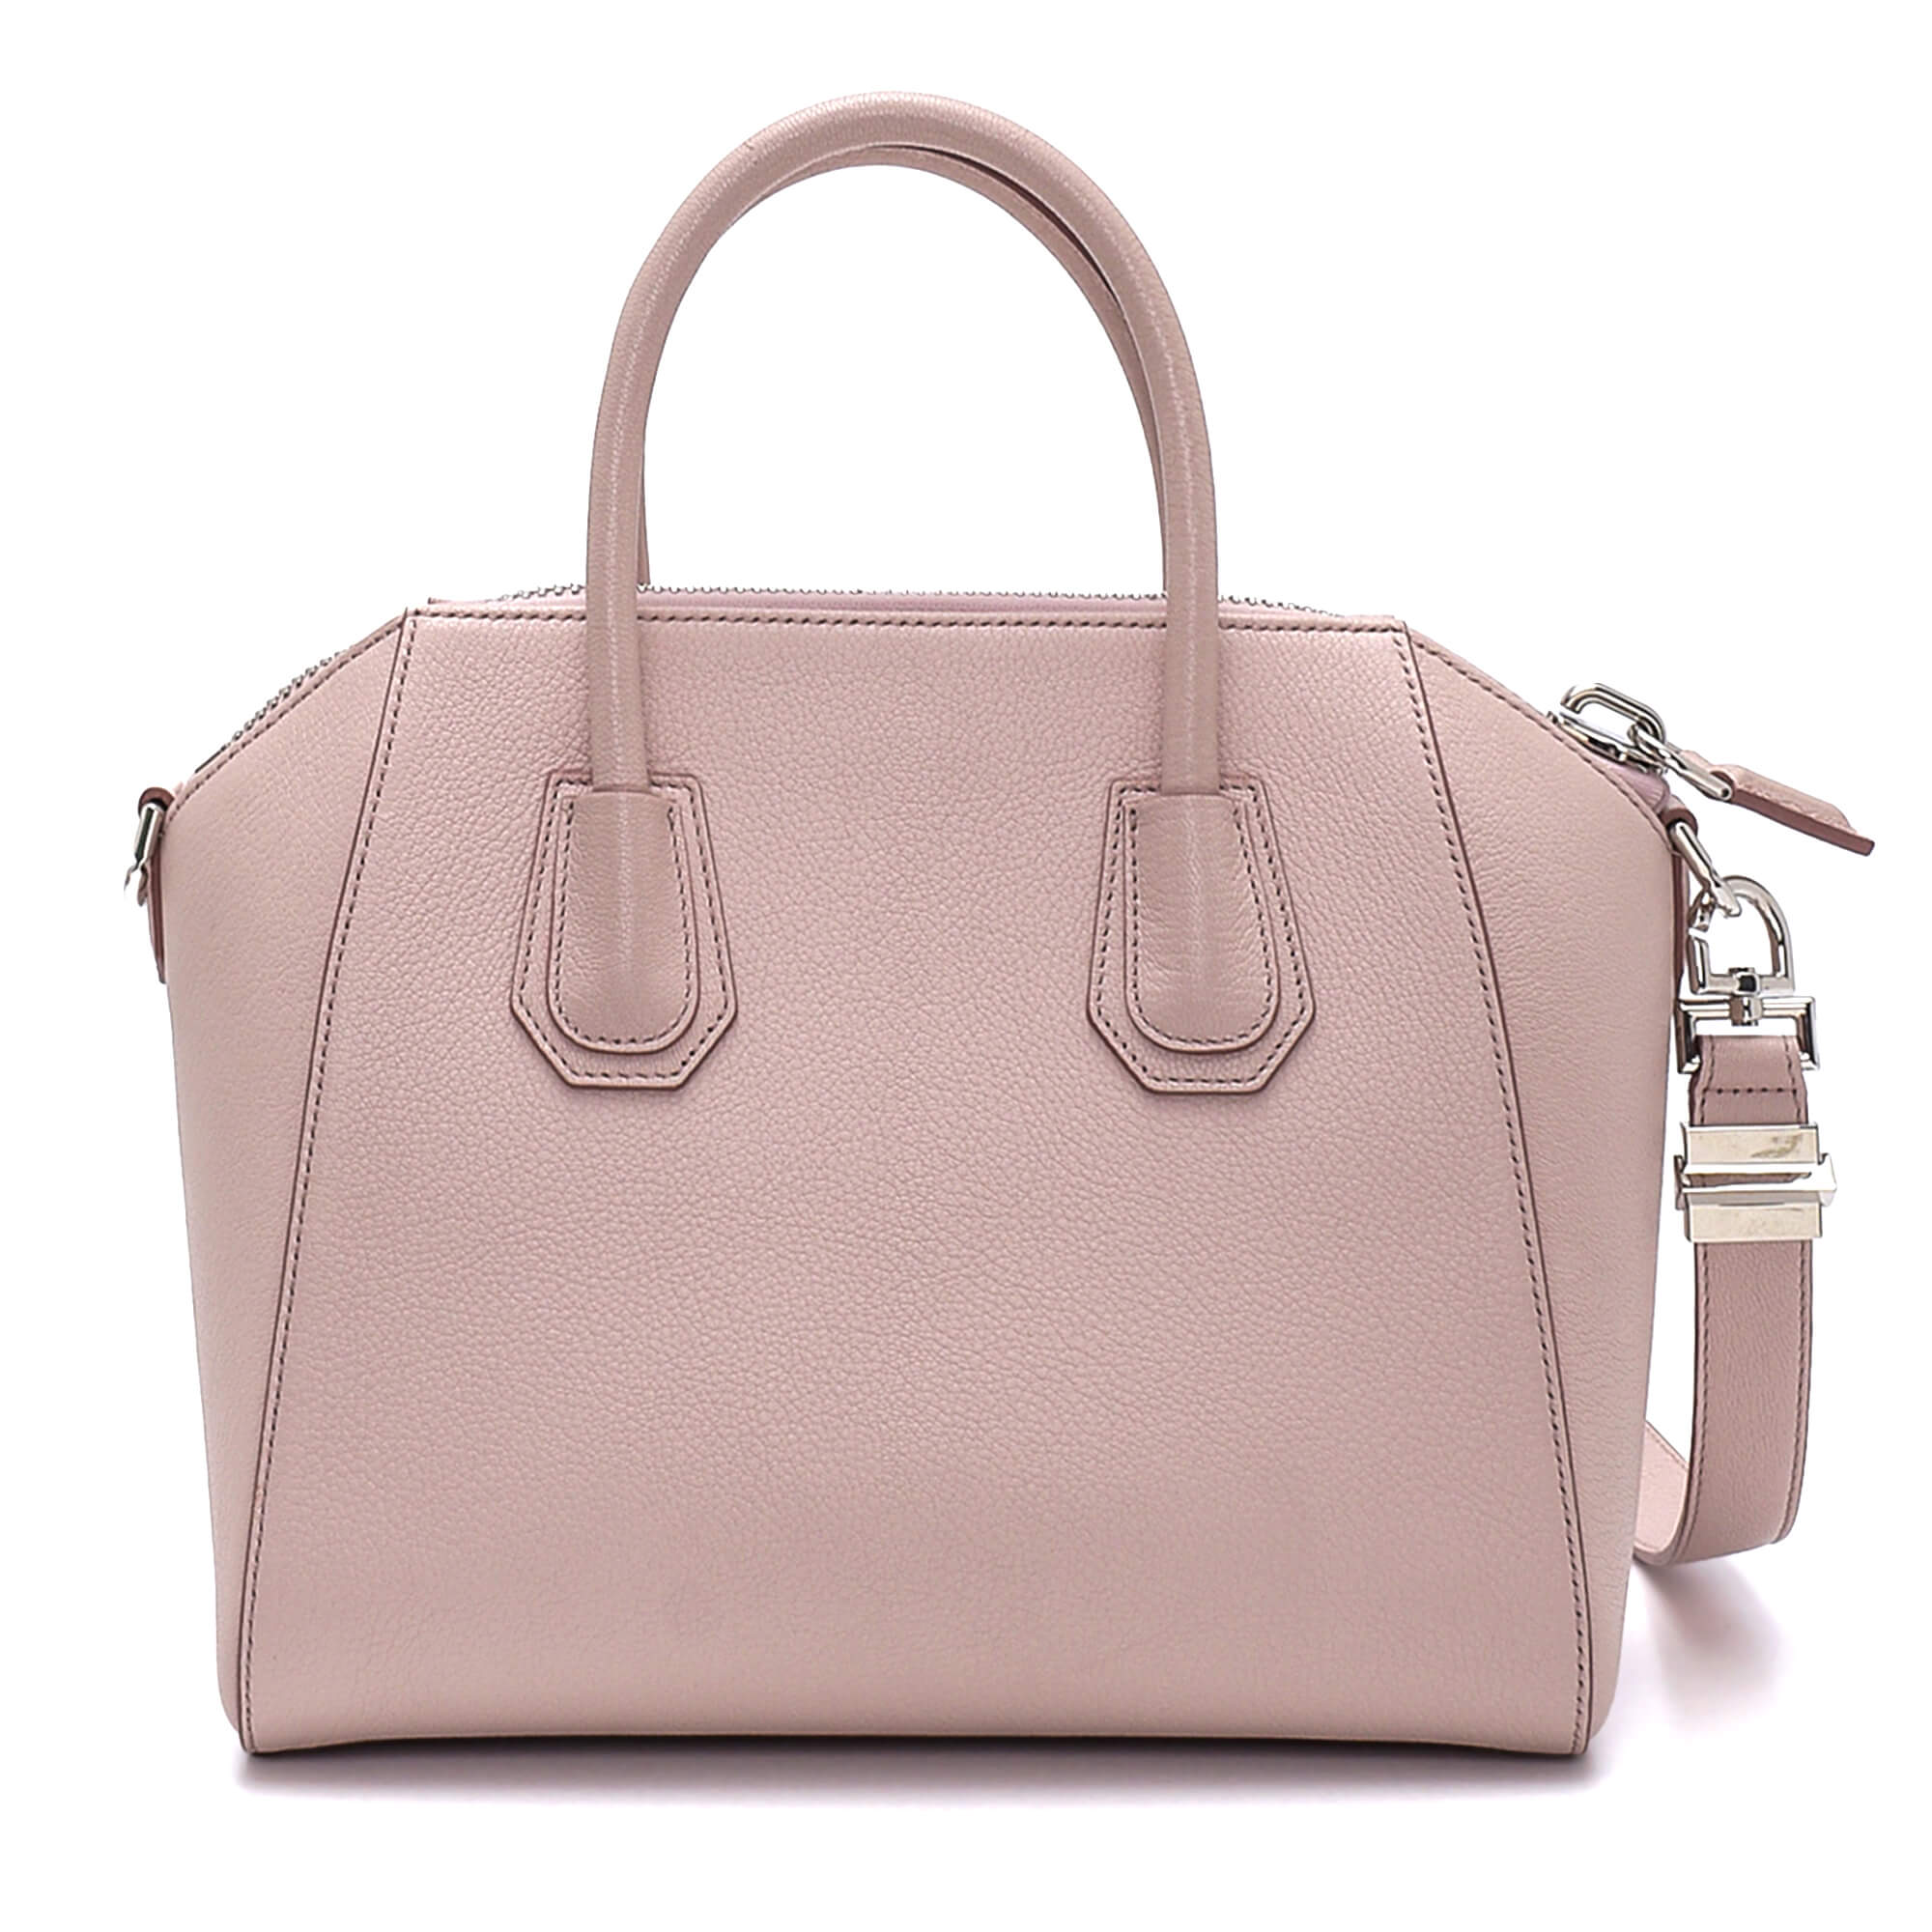 Givenchy - Powder Pink Leather Antigona Small Bag